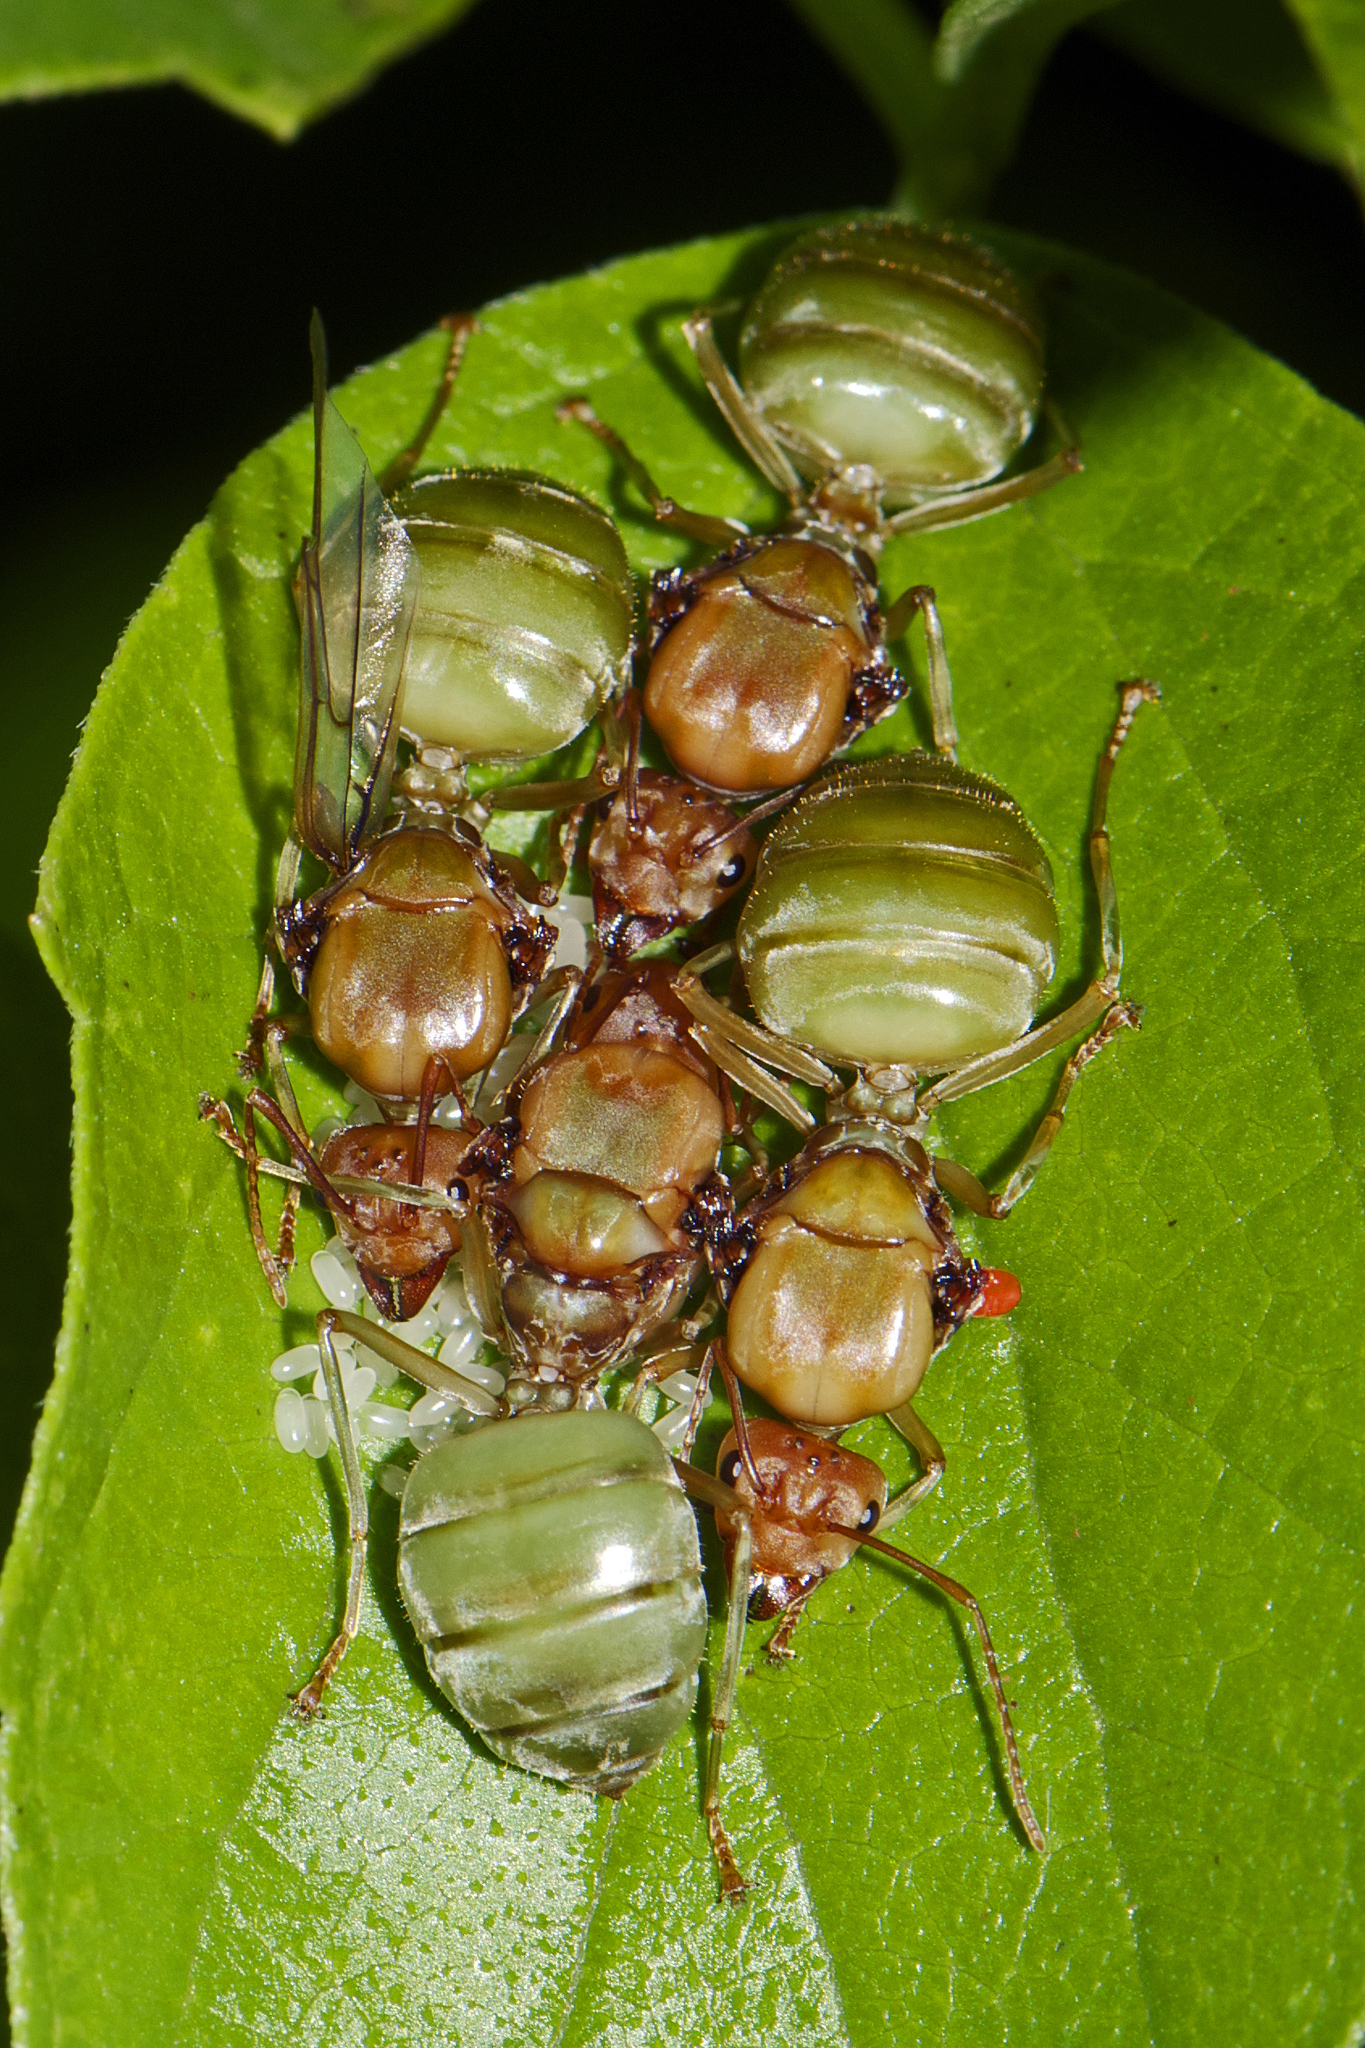 Asian Weaver Ant Encyclopedia Of Life